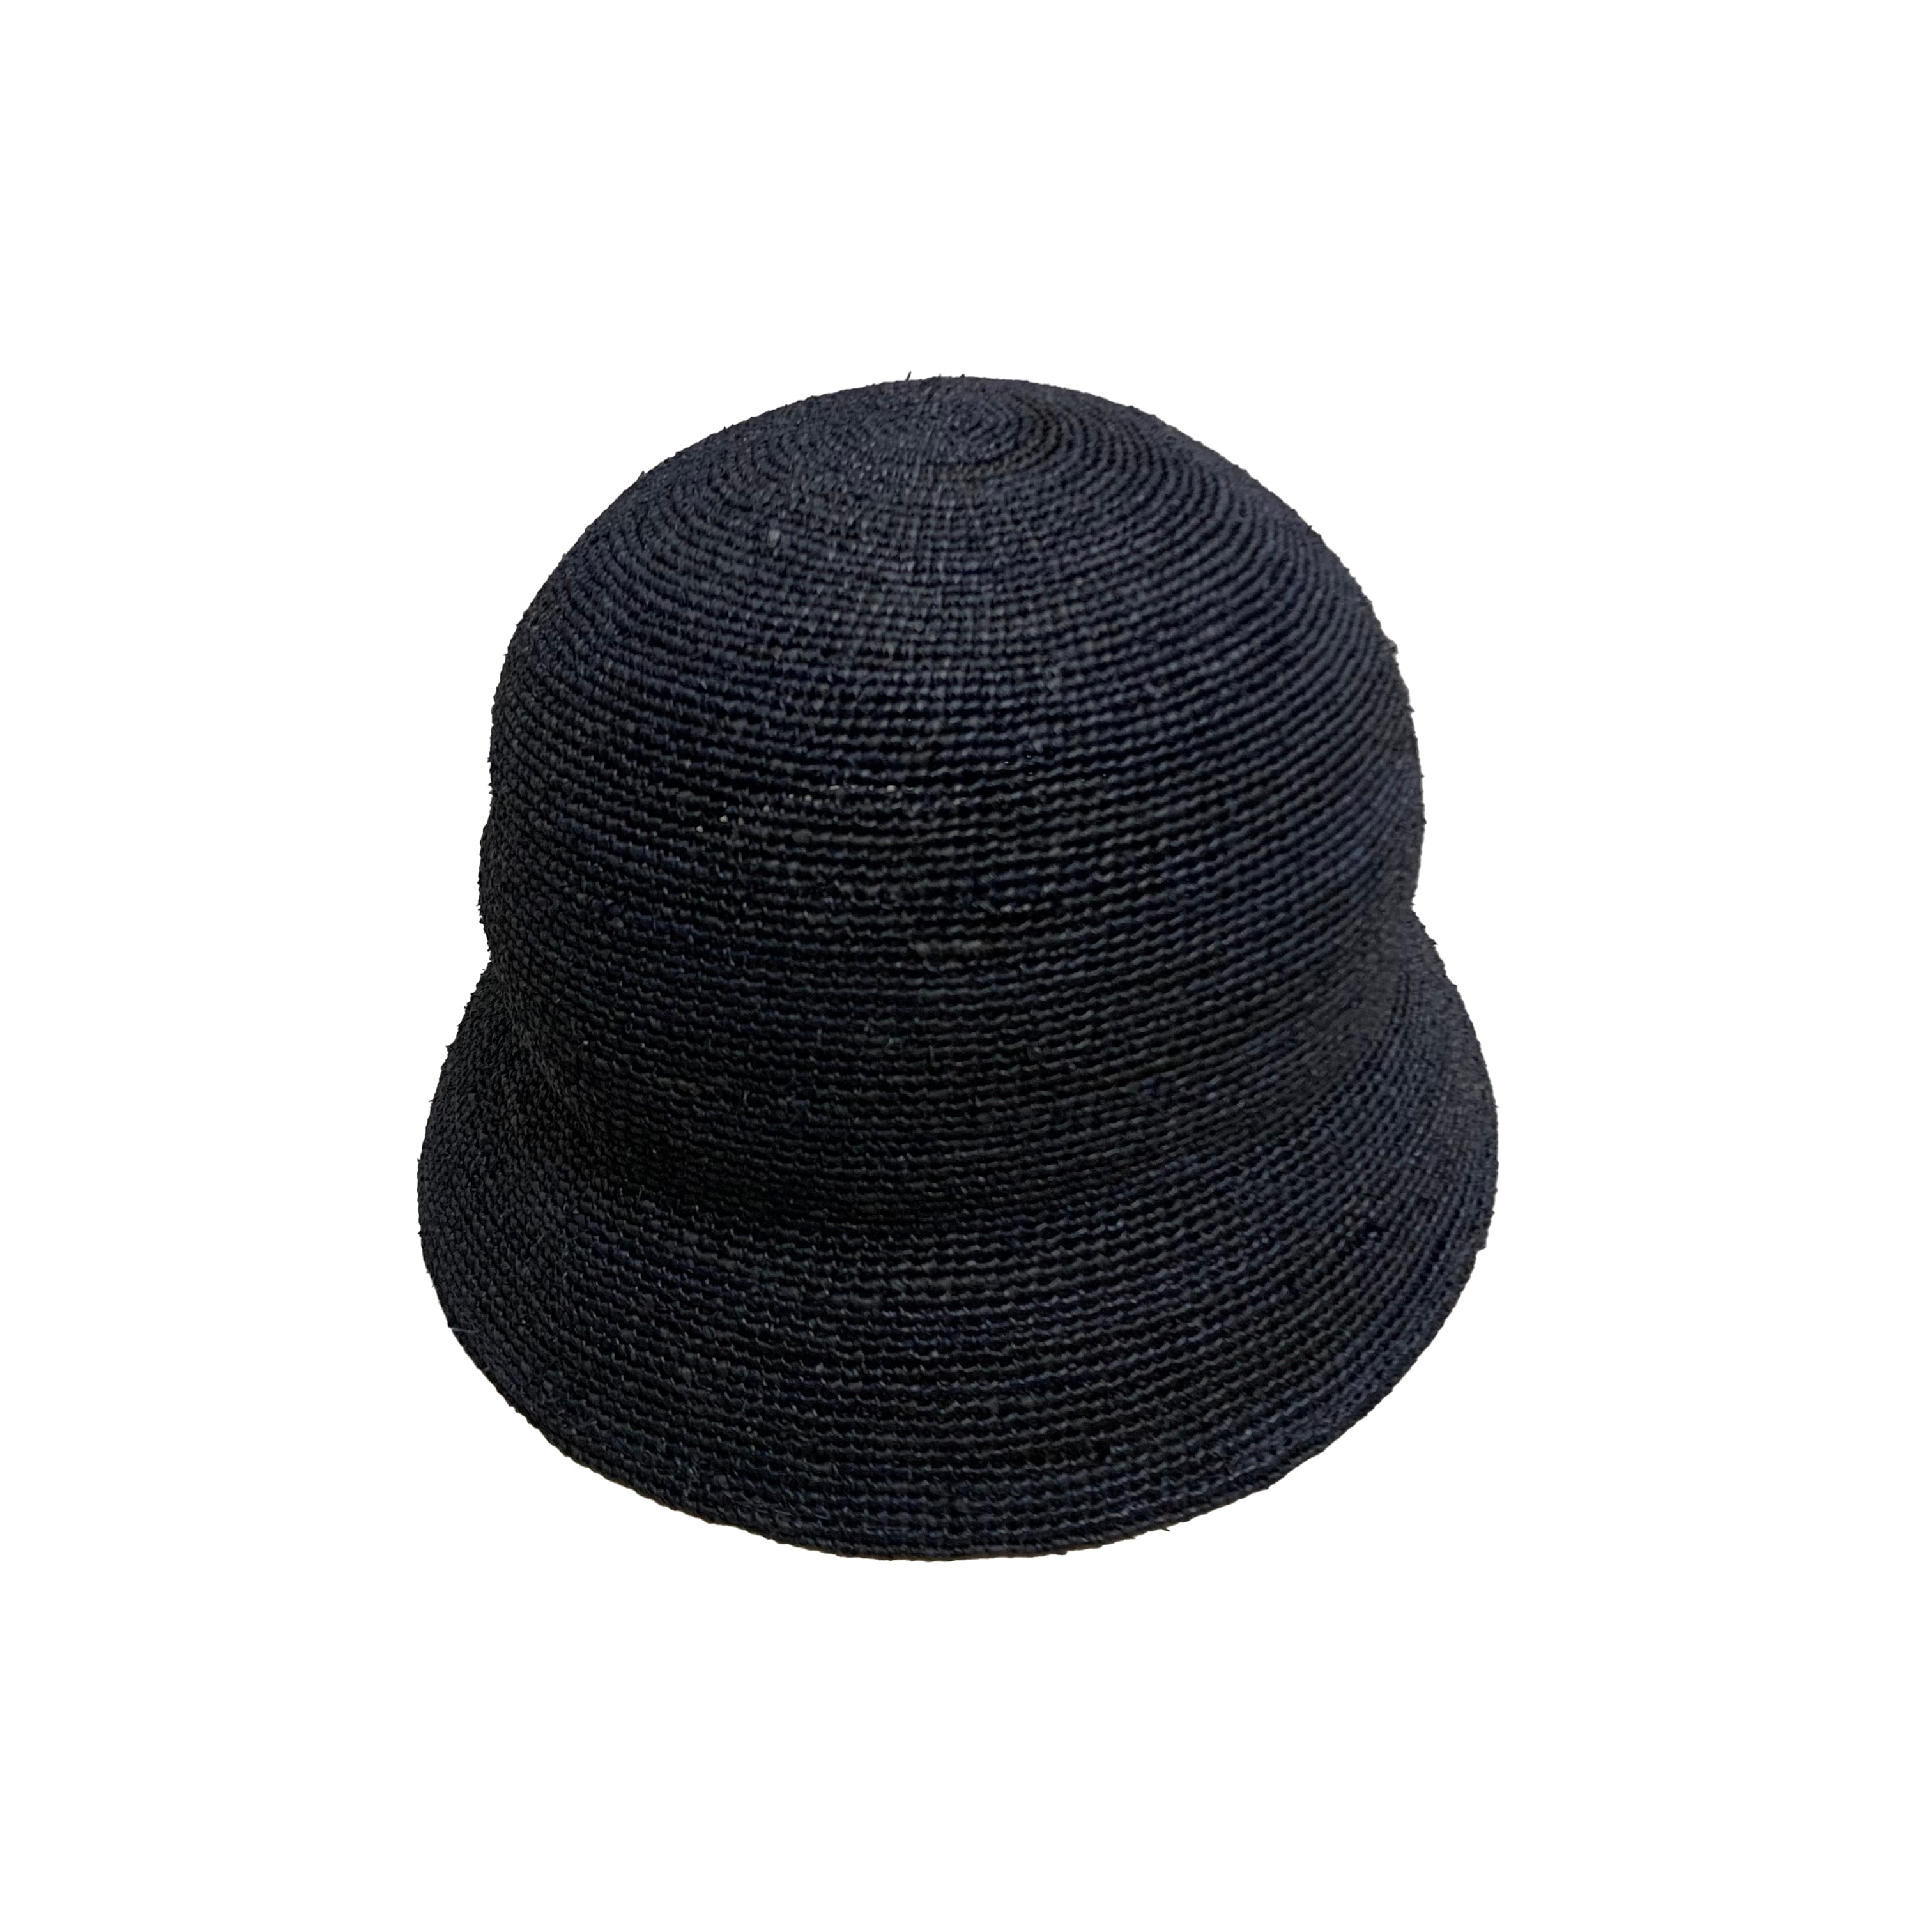 NOROLL / DETOURS RAFFIA HAT NAVY LARGE - 帽子